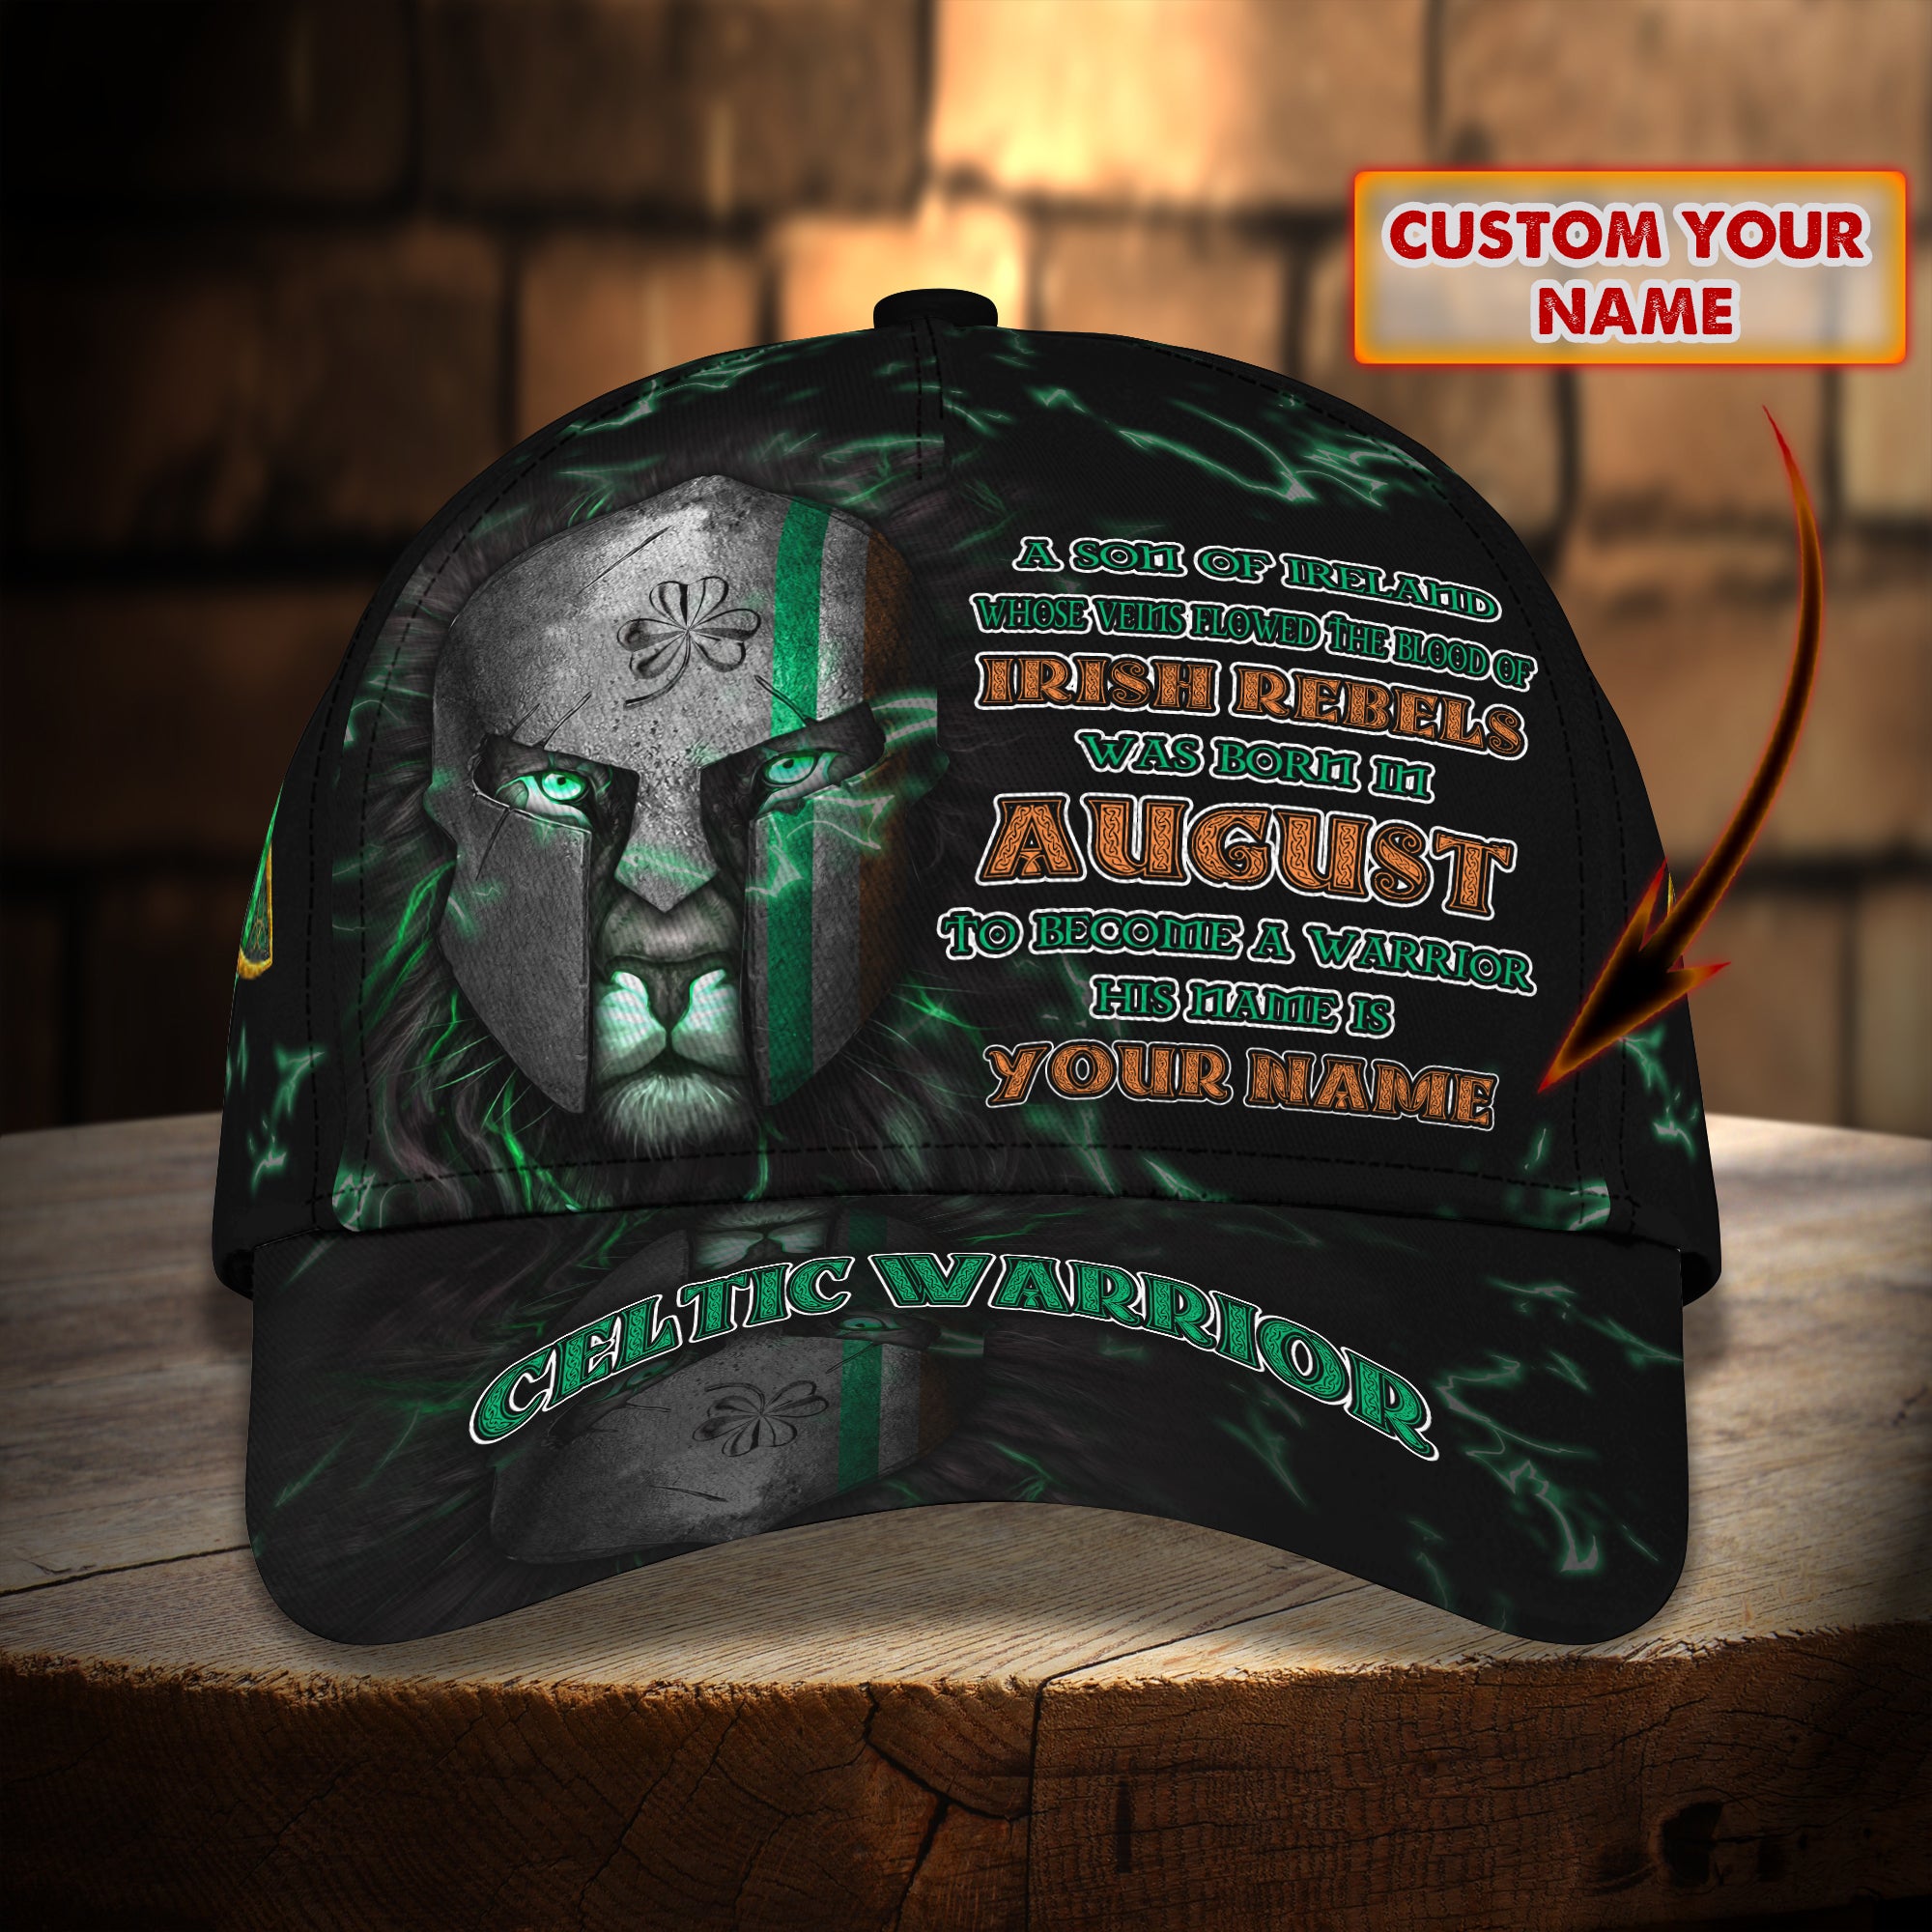 August Celtic Warrior - Personalized Name Cap - Loop - Vhv-cap-031